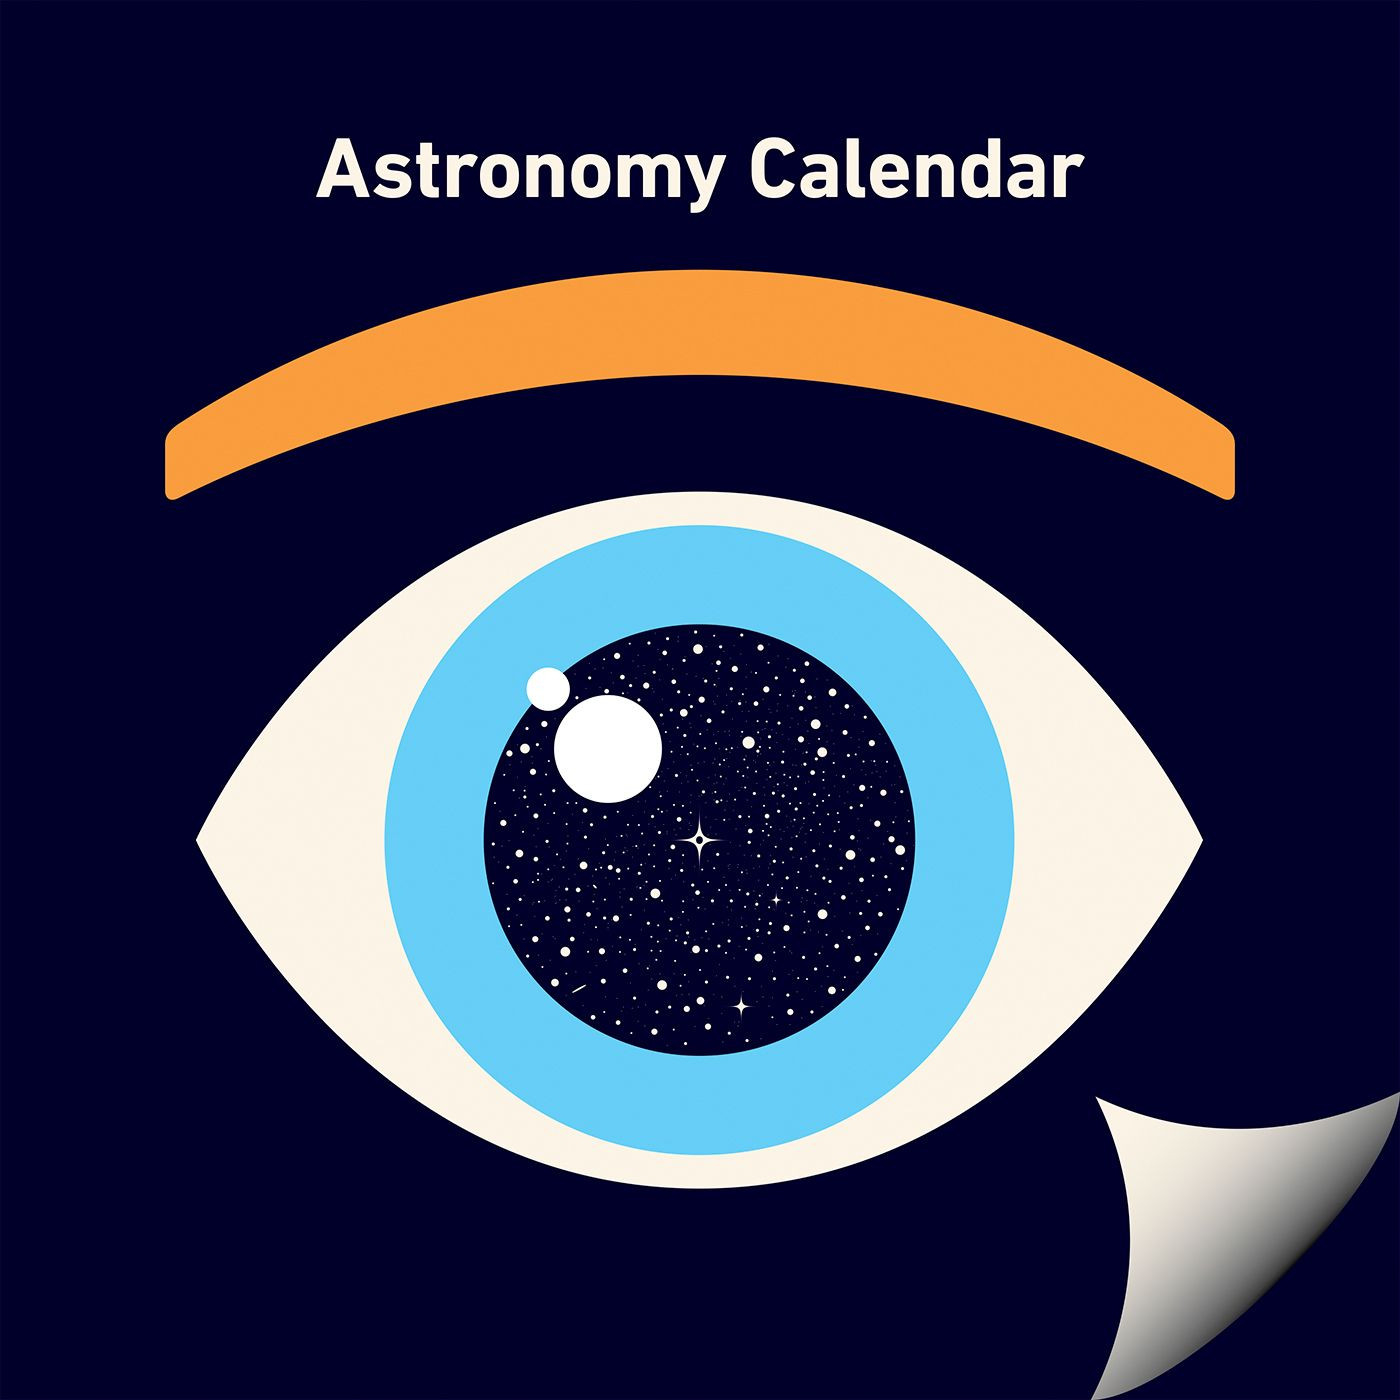 Vedi Questo Progetto @Behance: U201Castronomy Calendar  Astronomy Picture Calendar With Holidays